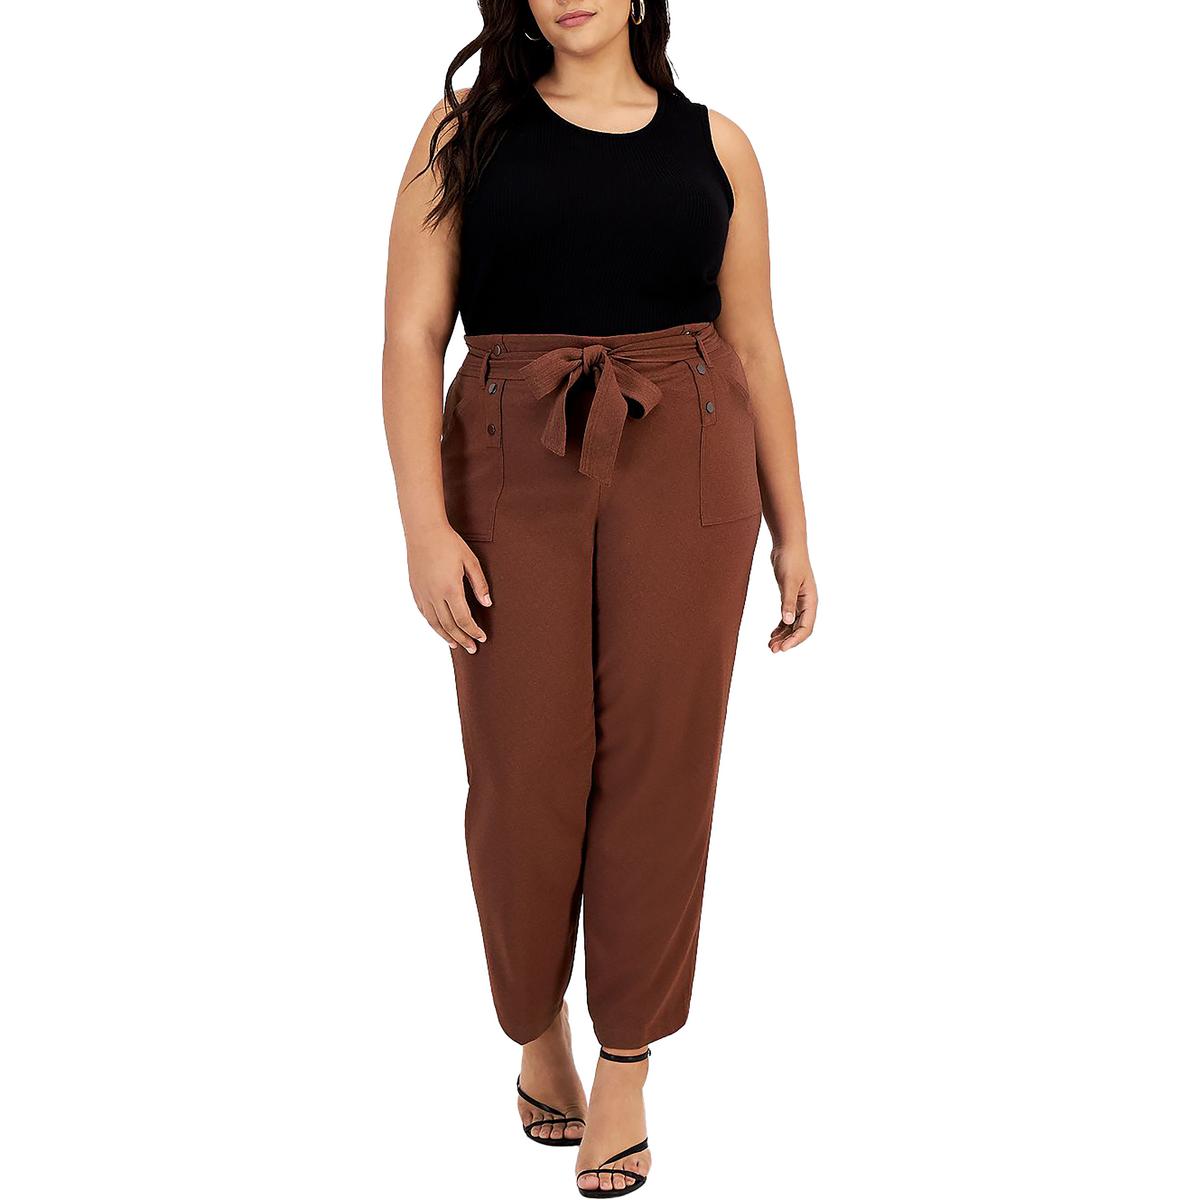  Women's Pants - Brown / Women's Pants / Women's Clothing:  Clothing, Shoes & Accessories